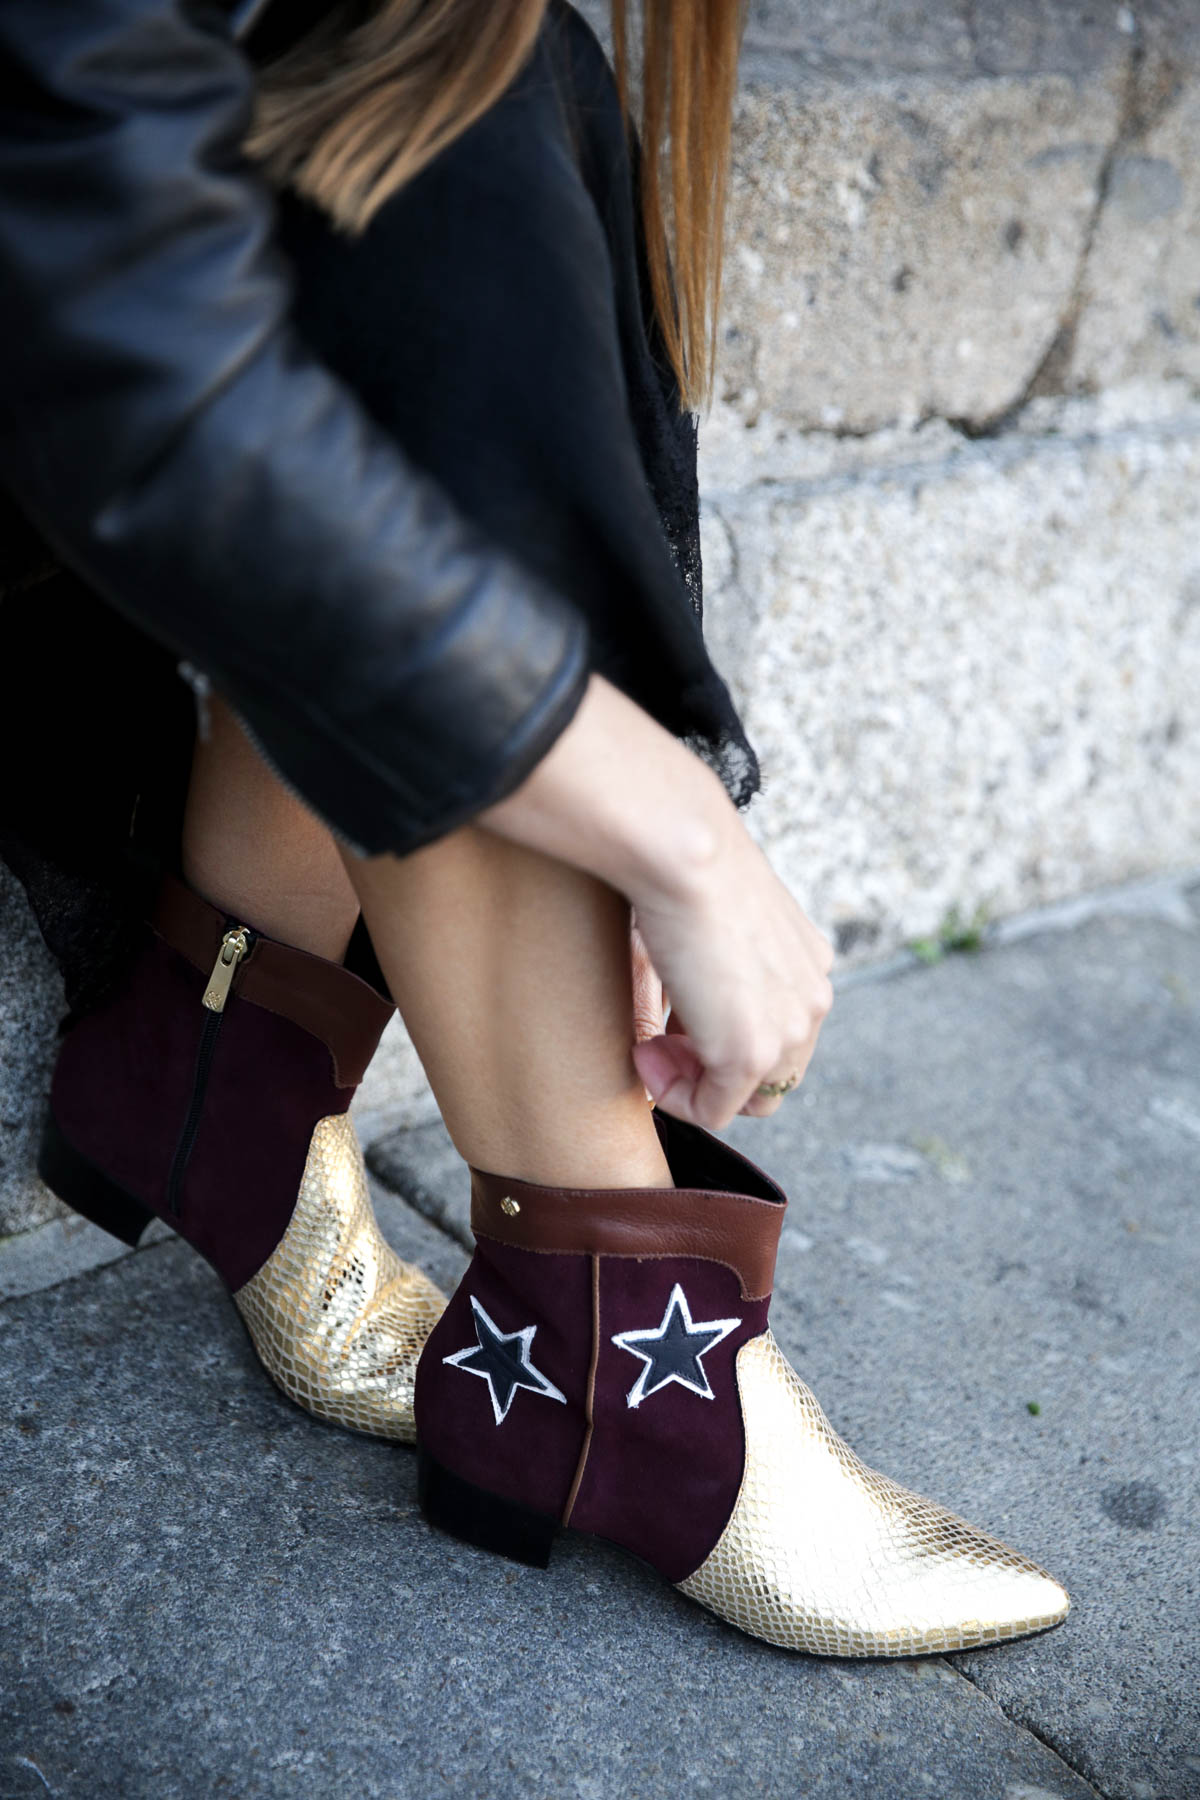 blogger-blog-bartabac-streetstyle-fashion-moda-look-portugal-braga-cuple-boots-slip-dress-schott-15